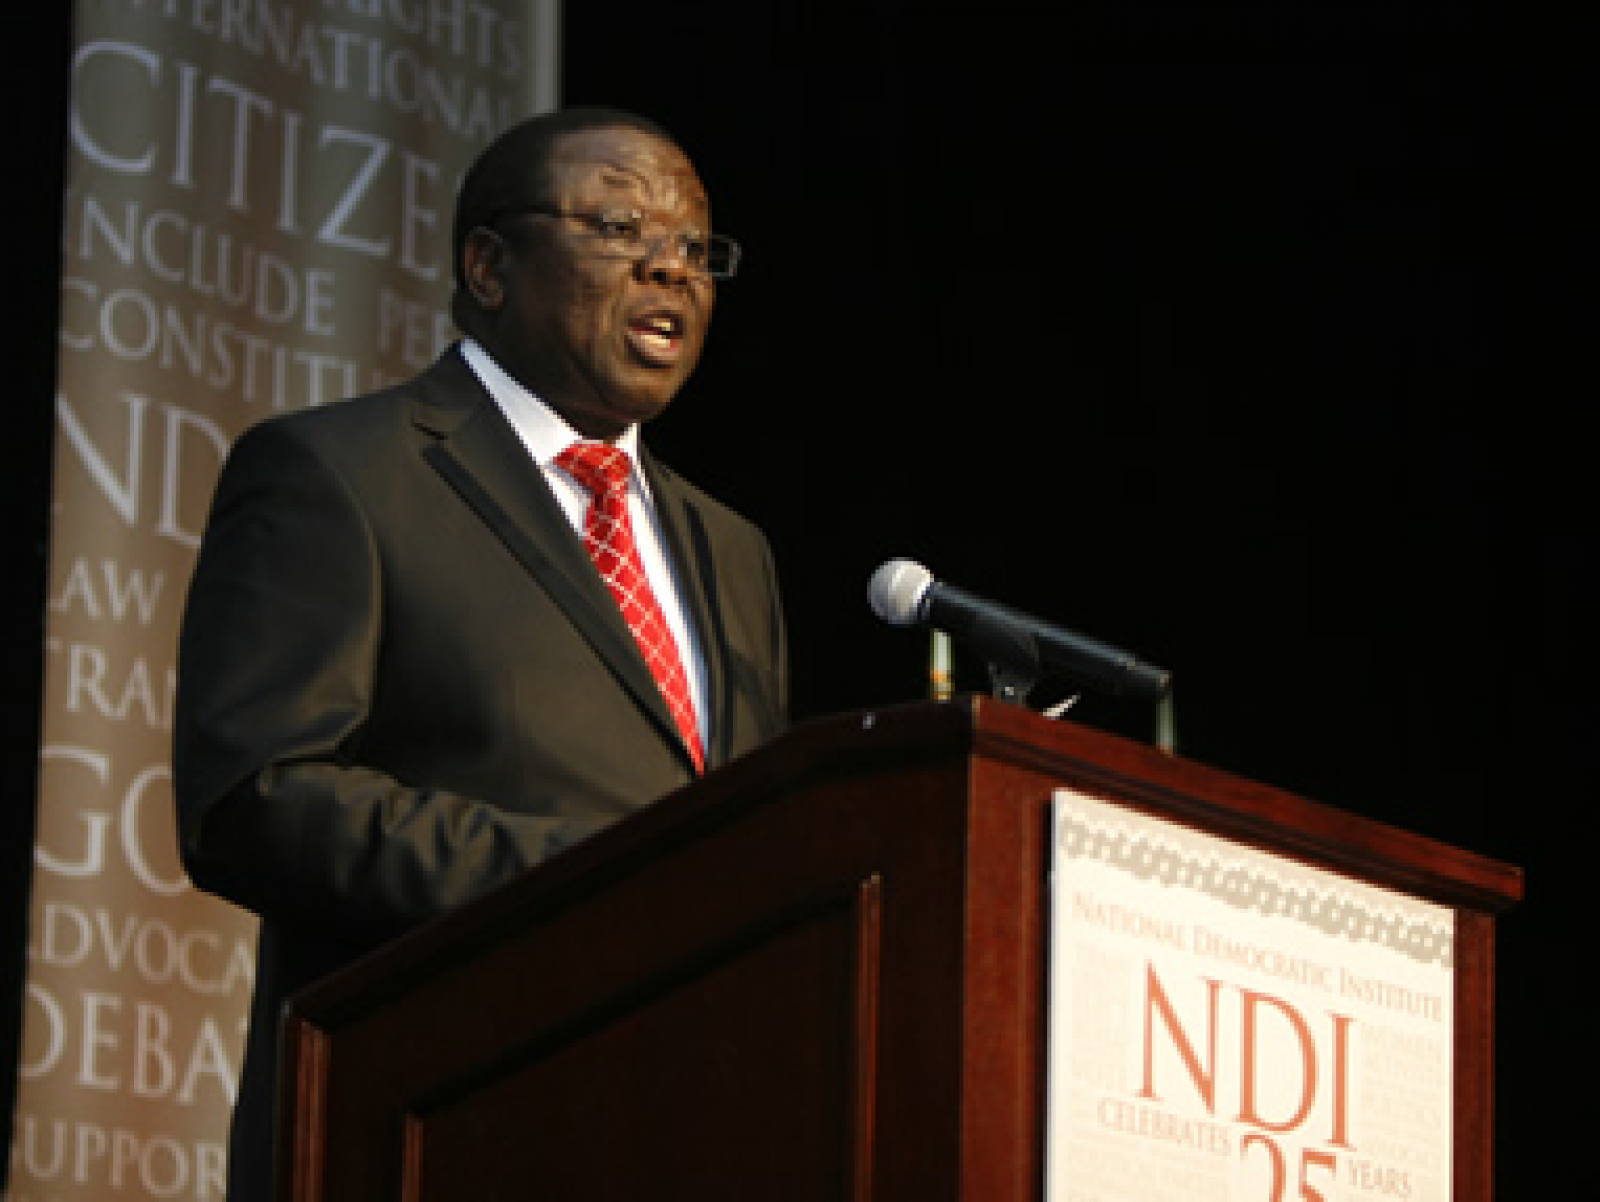 Prime Minister Tsvangirai of Zimbabwe, Chocó Women of Colombia Honored at NDI 25th Anniversary Dinner